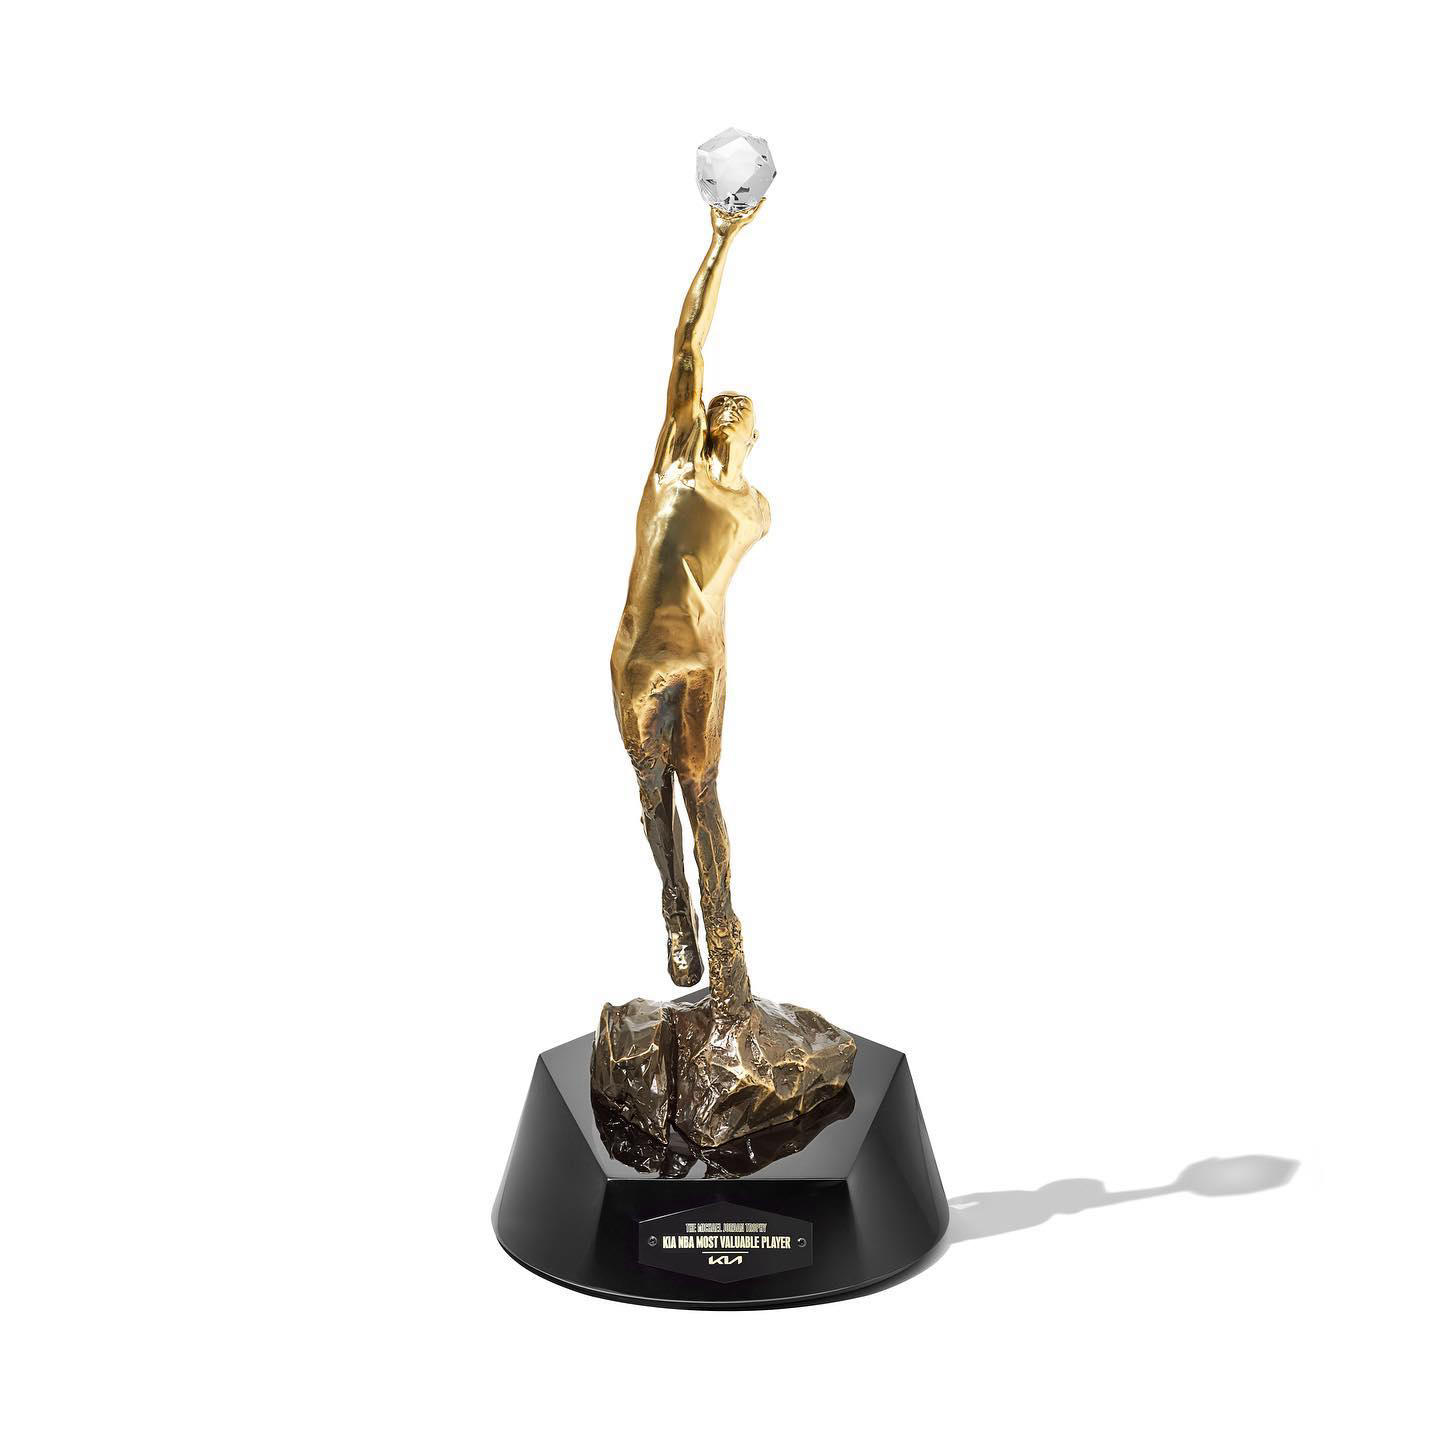 NBA - Introducing six new trophies for the Kia Performance Award Winners, honoring NBA Legends Wilt